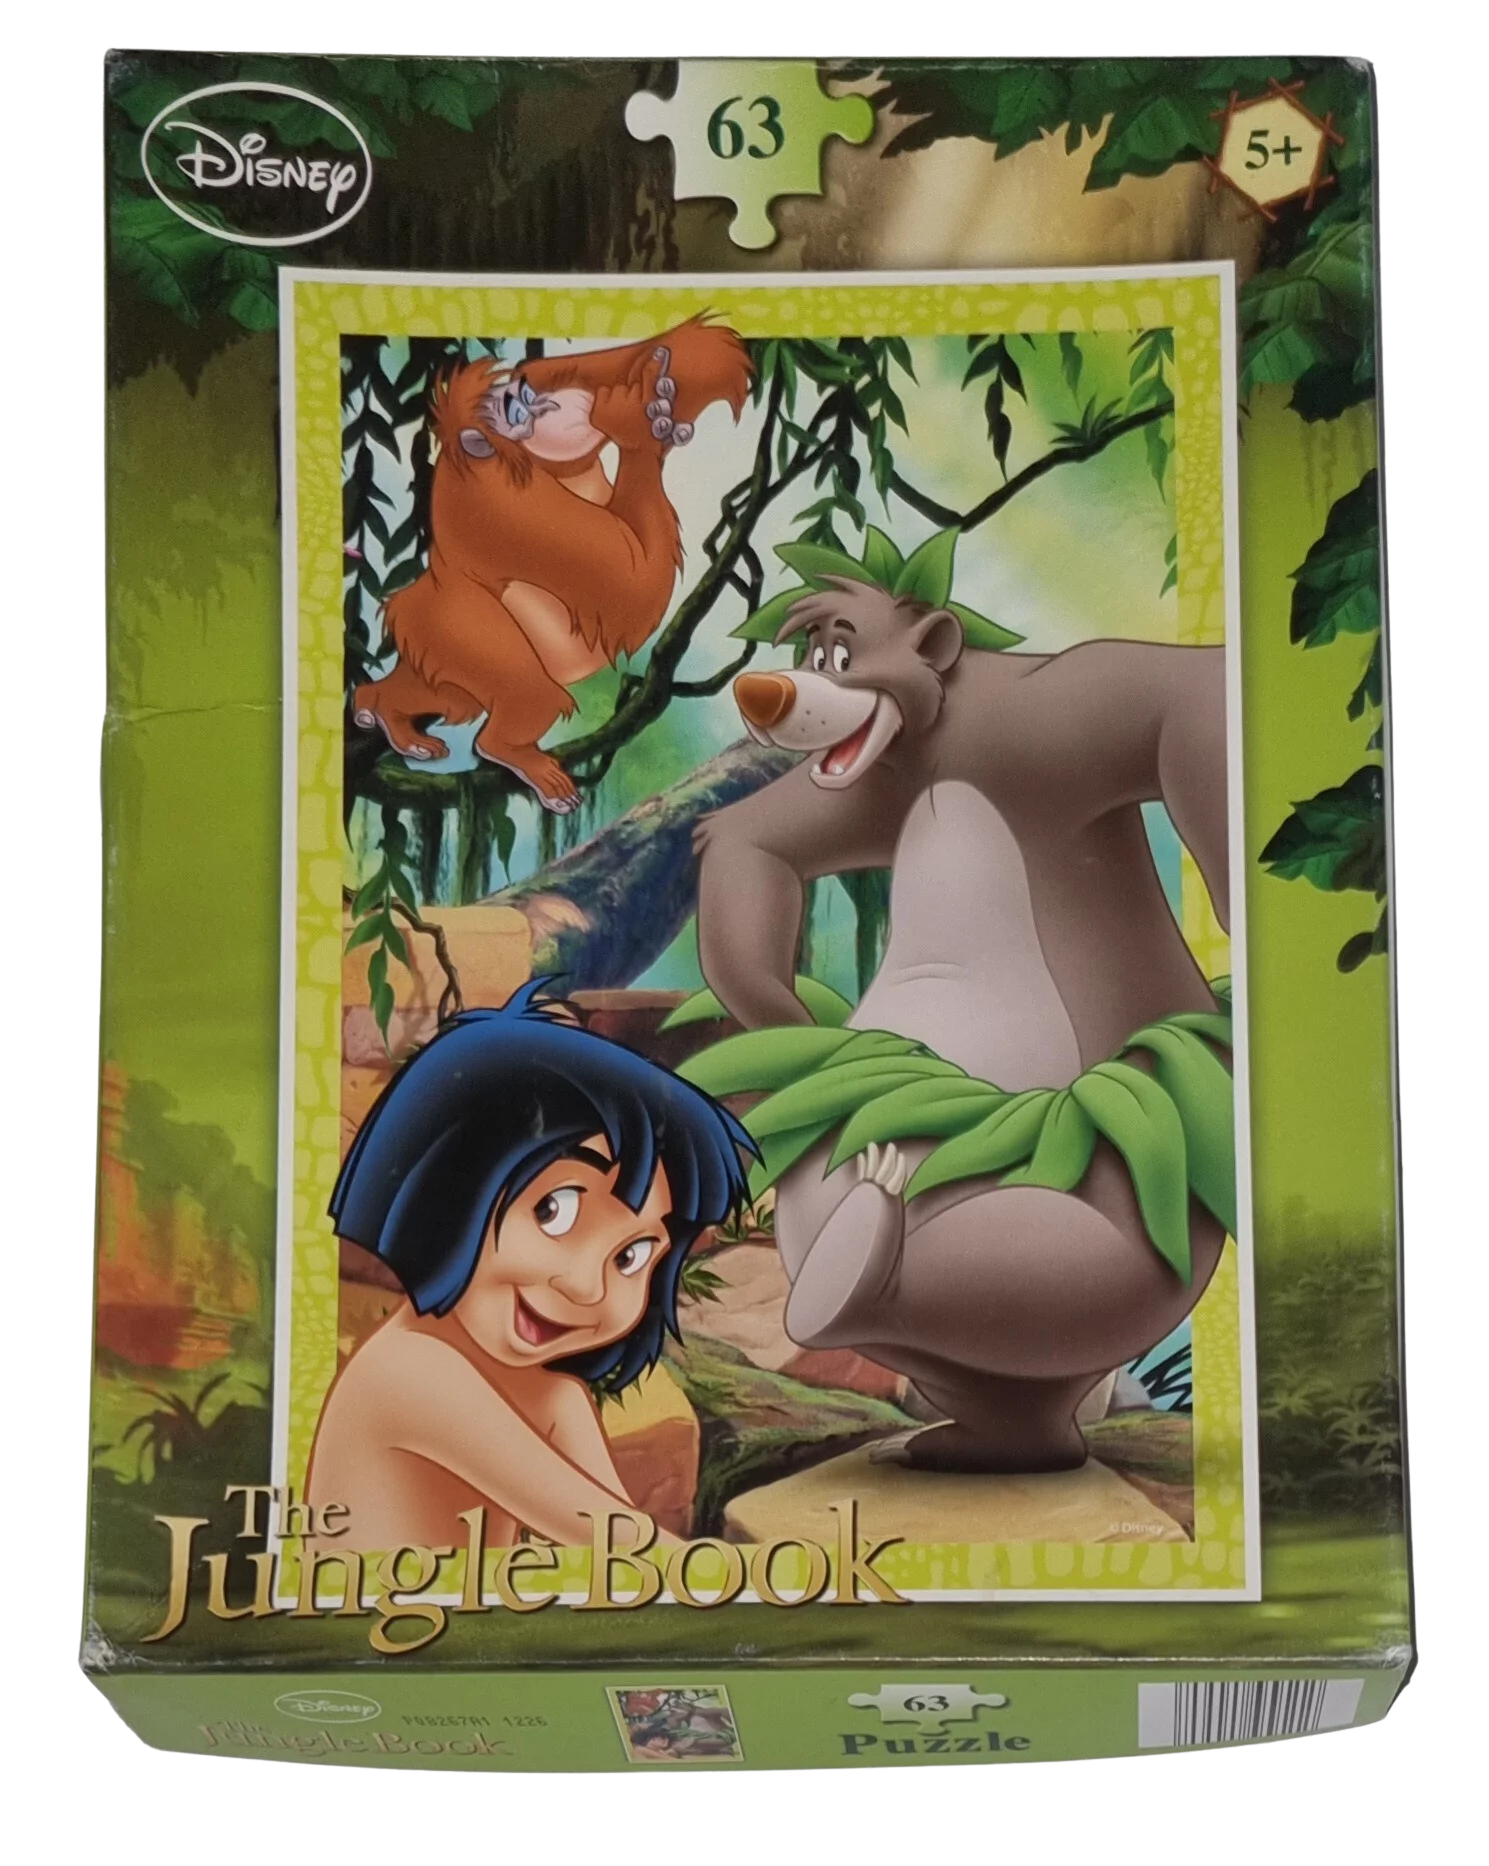 Disney The Jungle Book 63 Teile